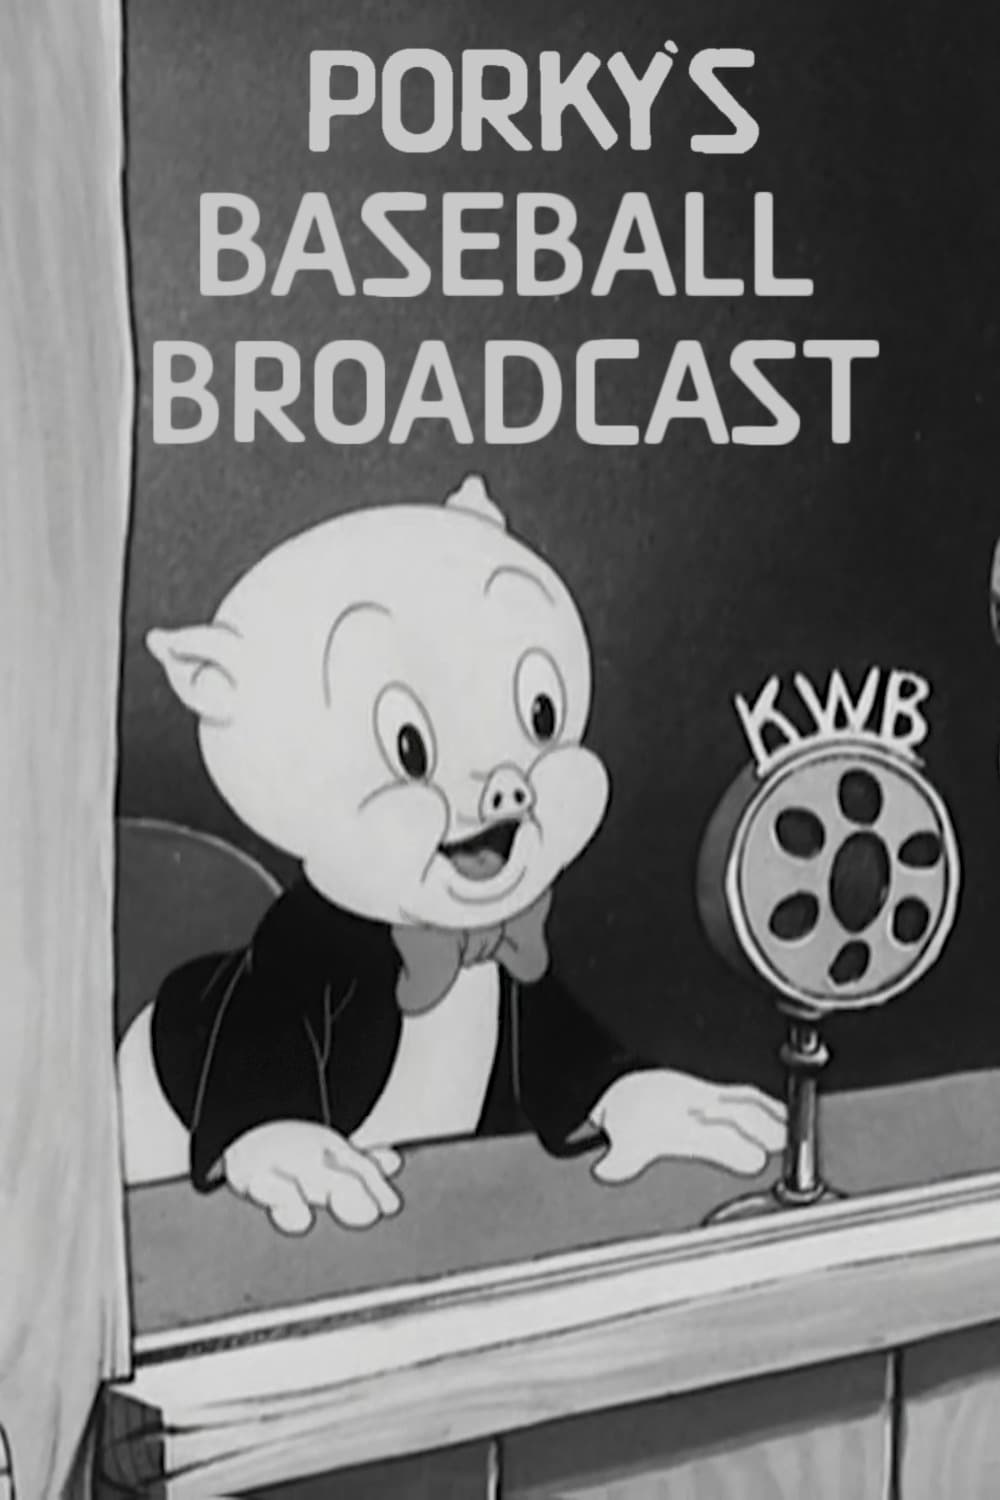 Porky's Baseball Broadcast (1940)